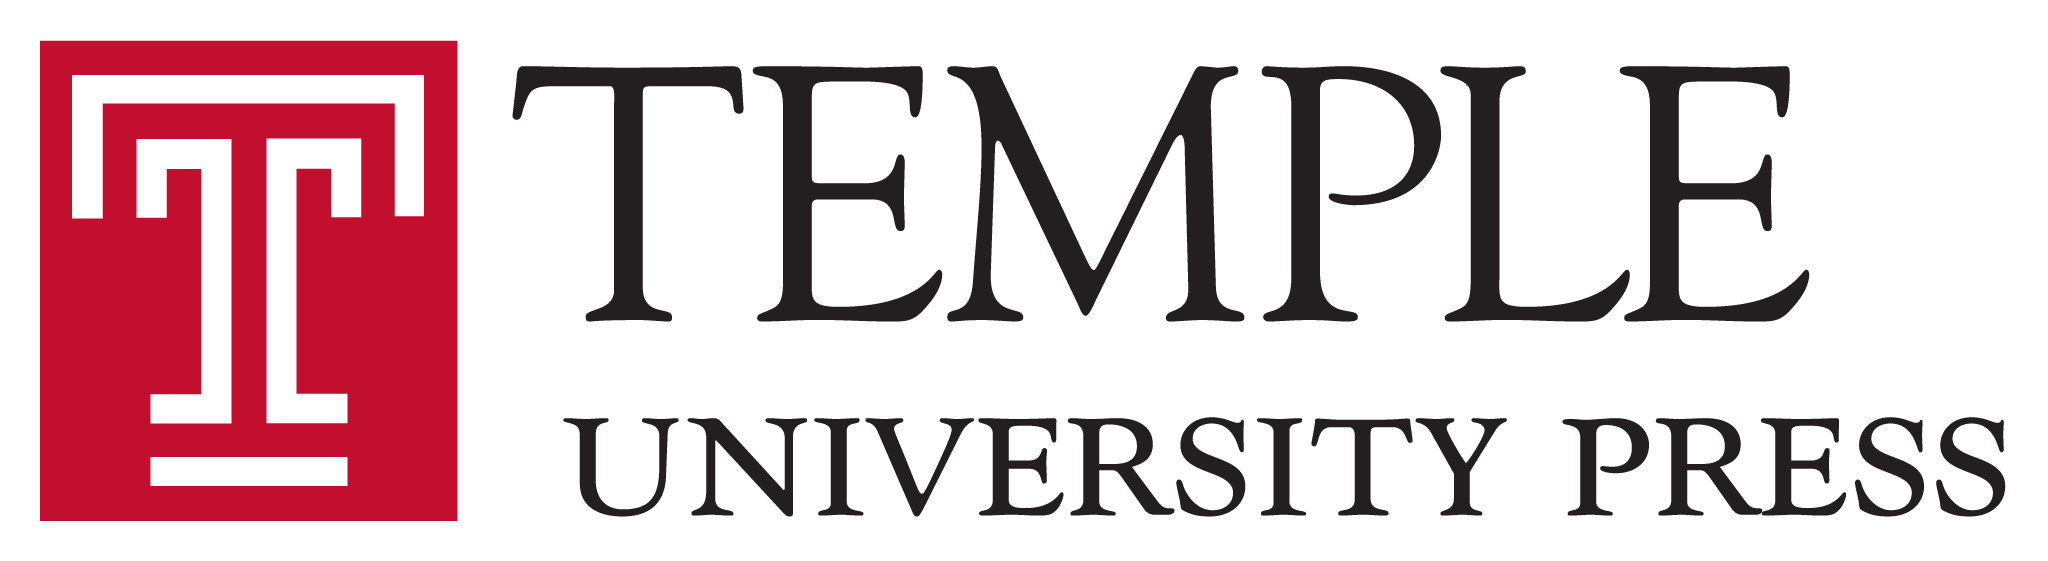 Temple University Press logo